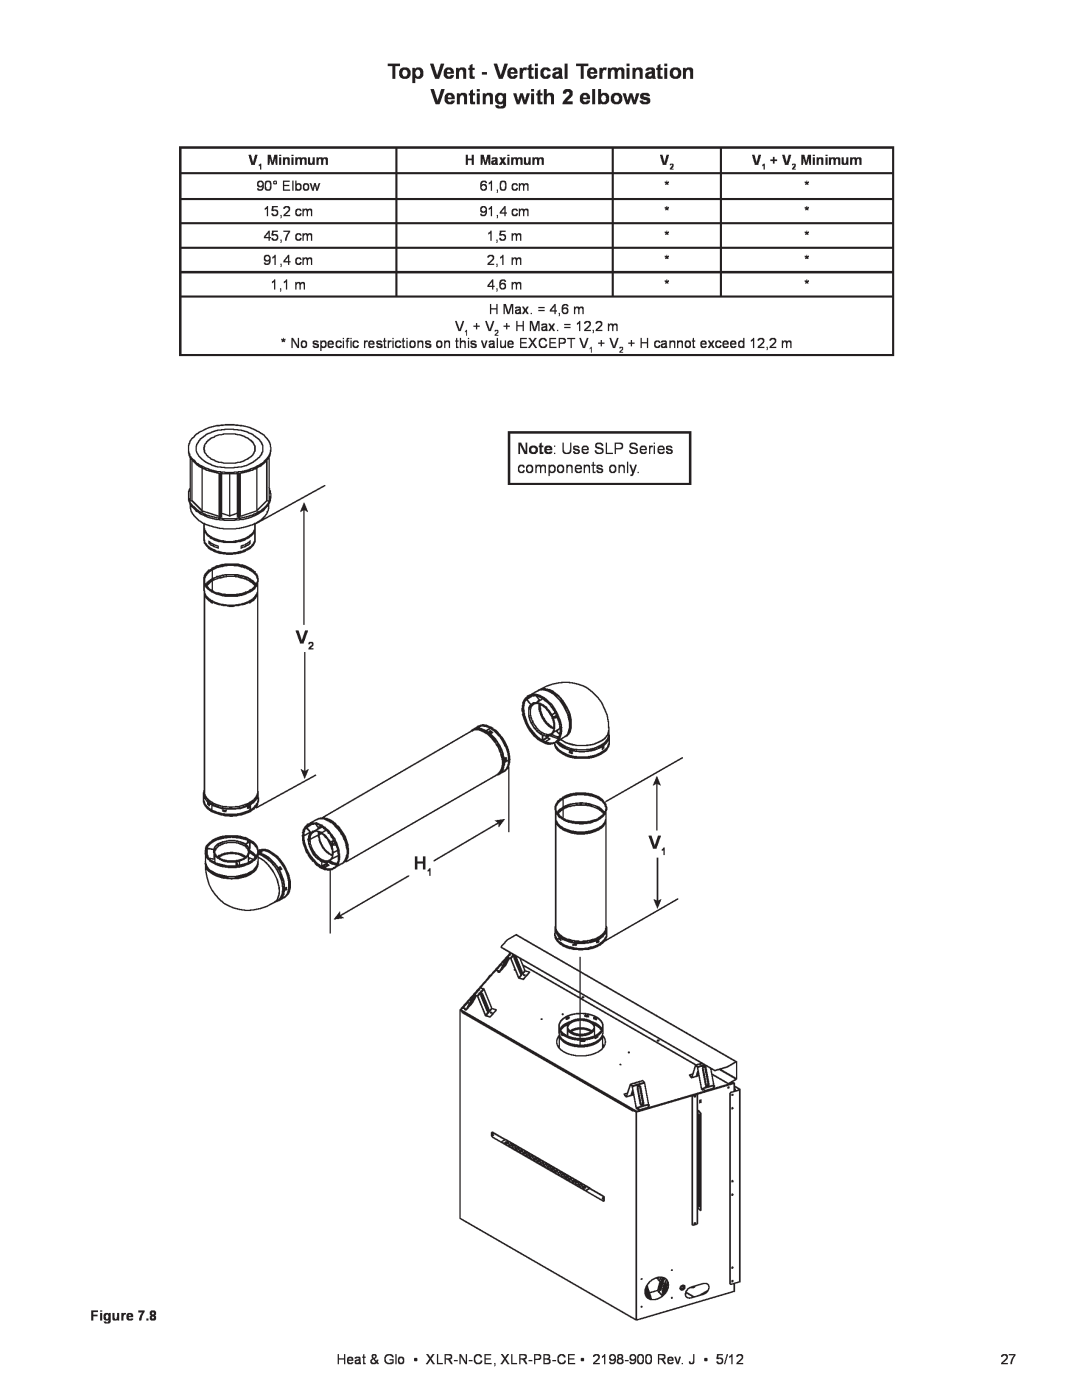 Heat & Glo LifeStyle XLR-PB-CE manual Top Vent - Vertical Termination, Venting with 2 elbows, V1 Minimum, H Maximum, Figure 